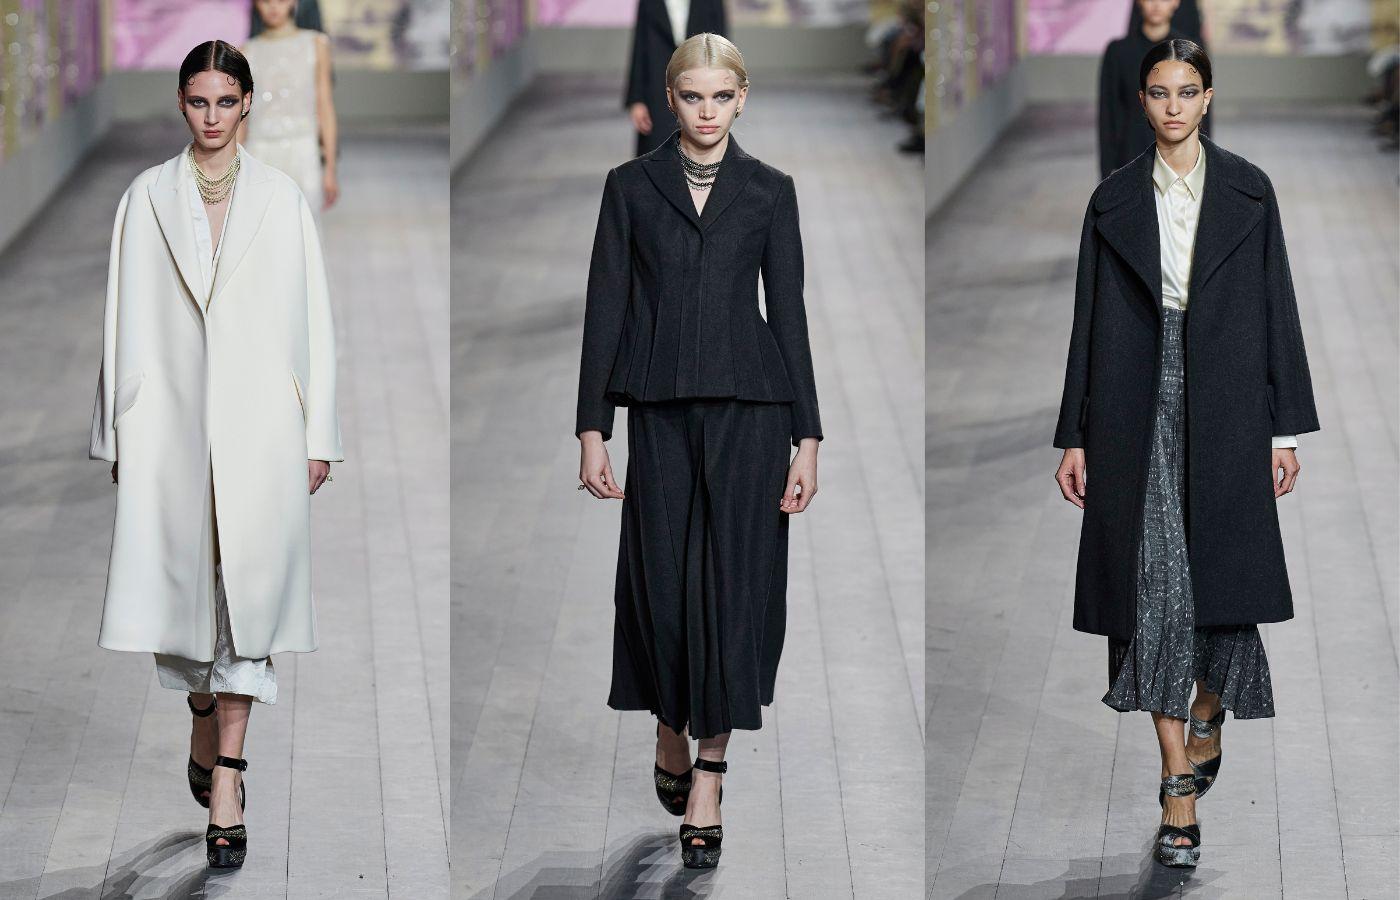 Pokaz haute couture domu mody Dior na wiosnę 2023 (Fot. Spotlight. Launchmetrics/Agencja FREE)